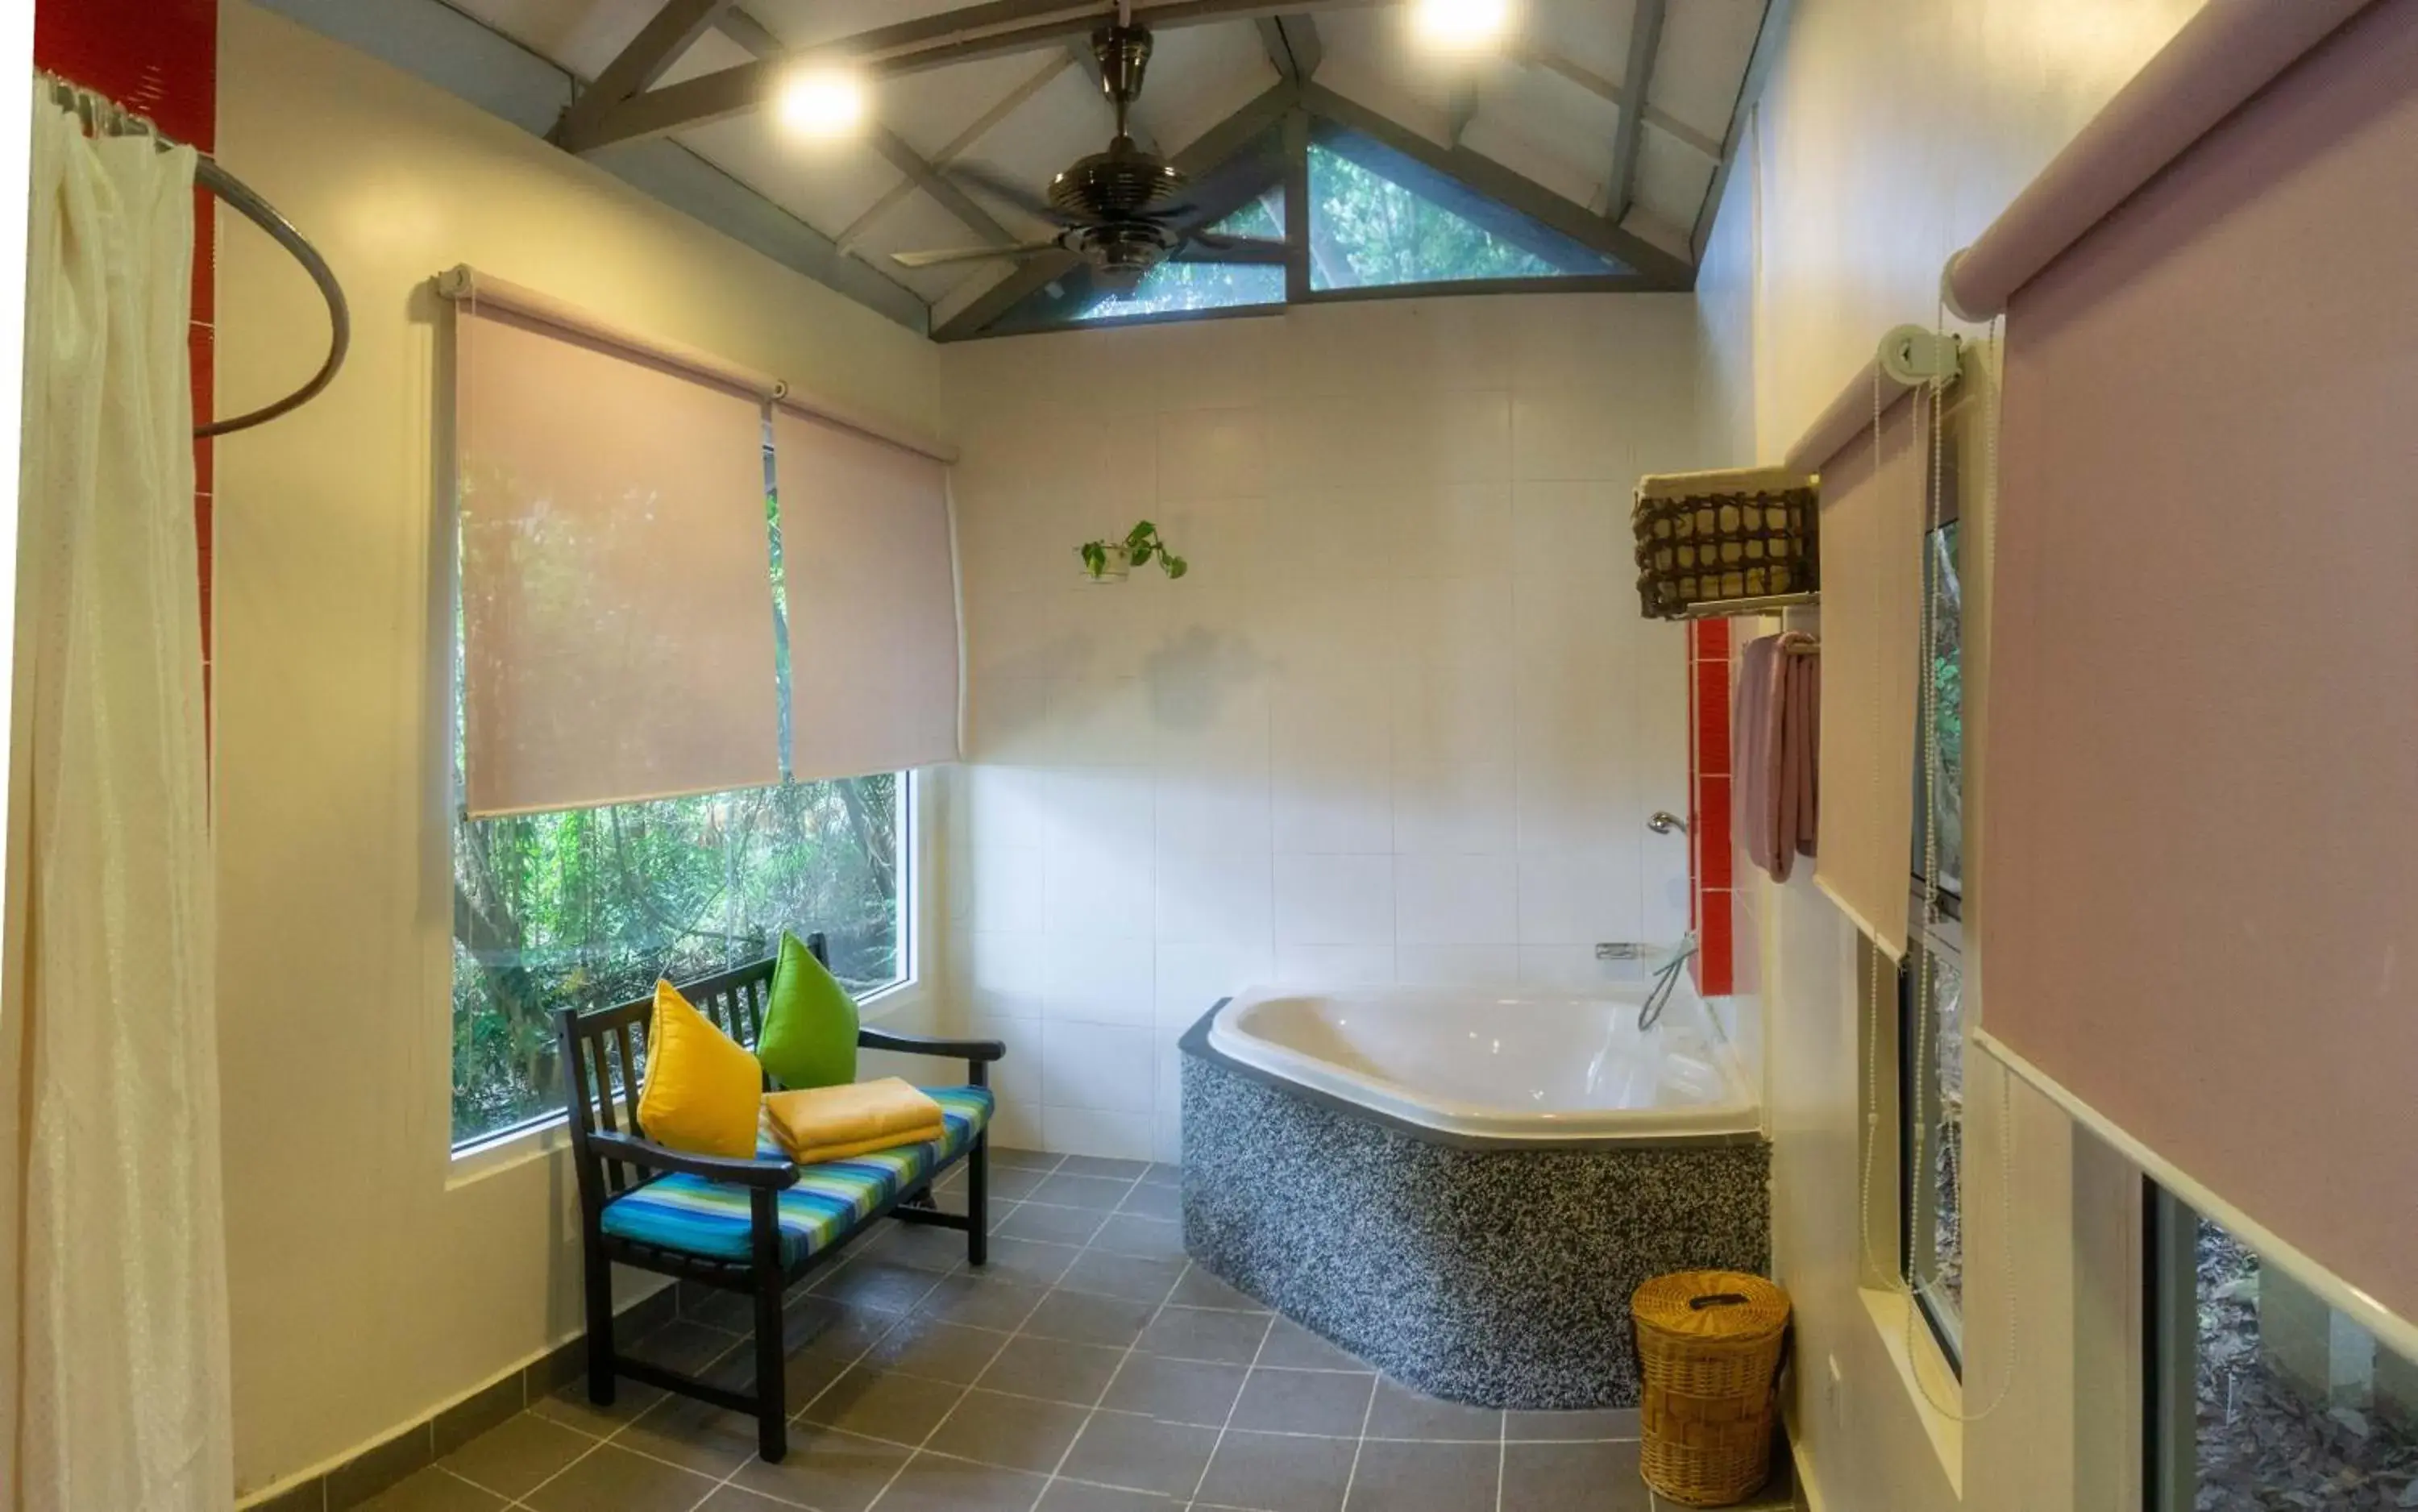 Bathroom in Sutera Sanctuary Lodges at Manukan Island